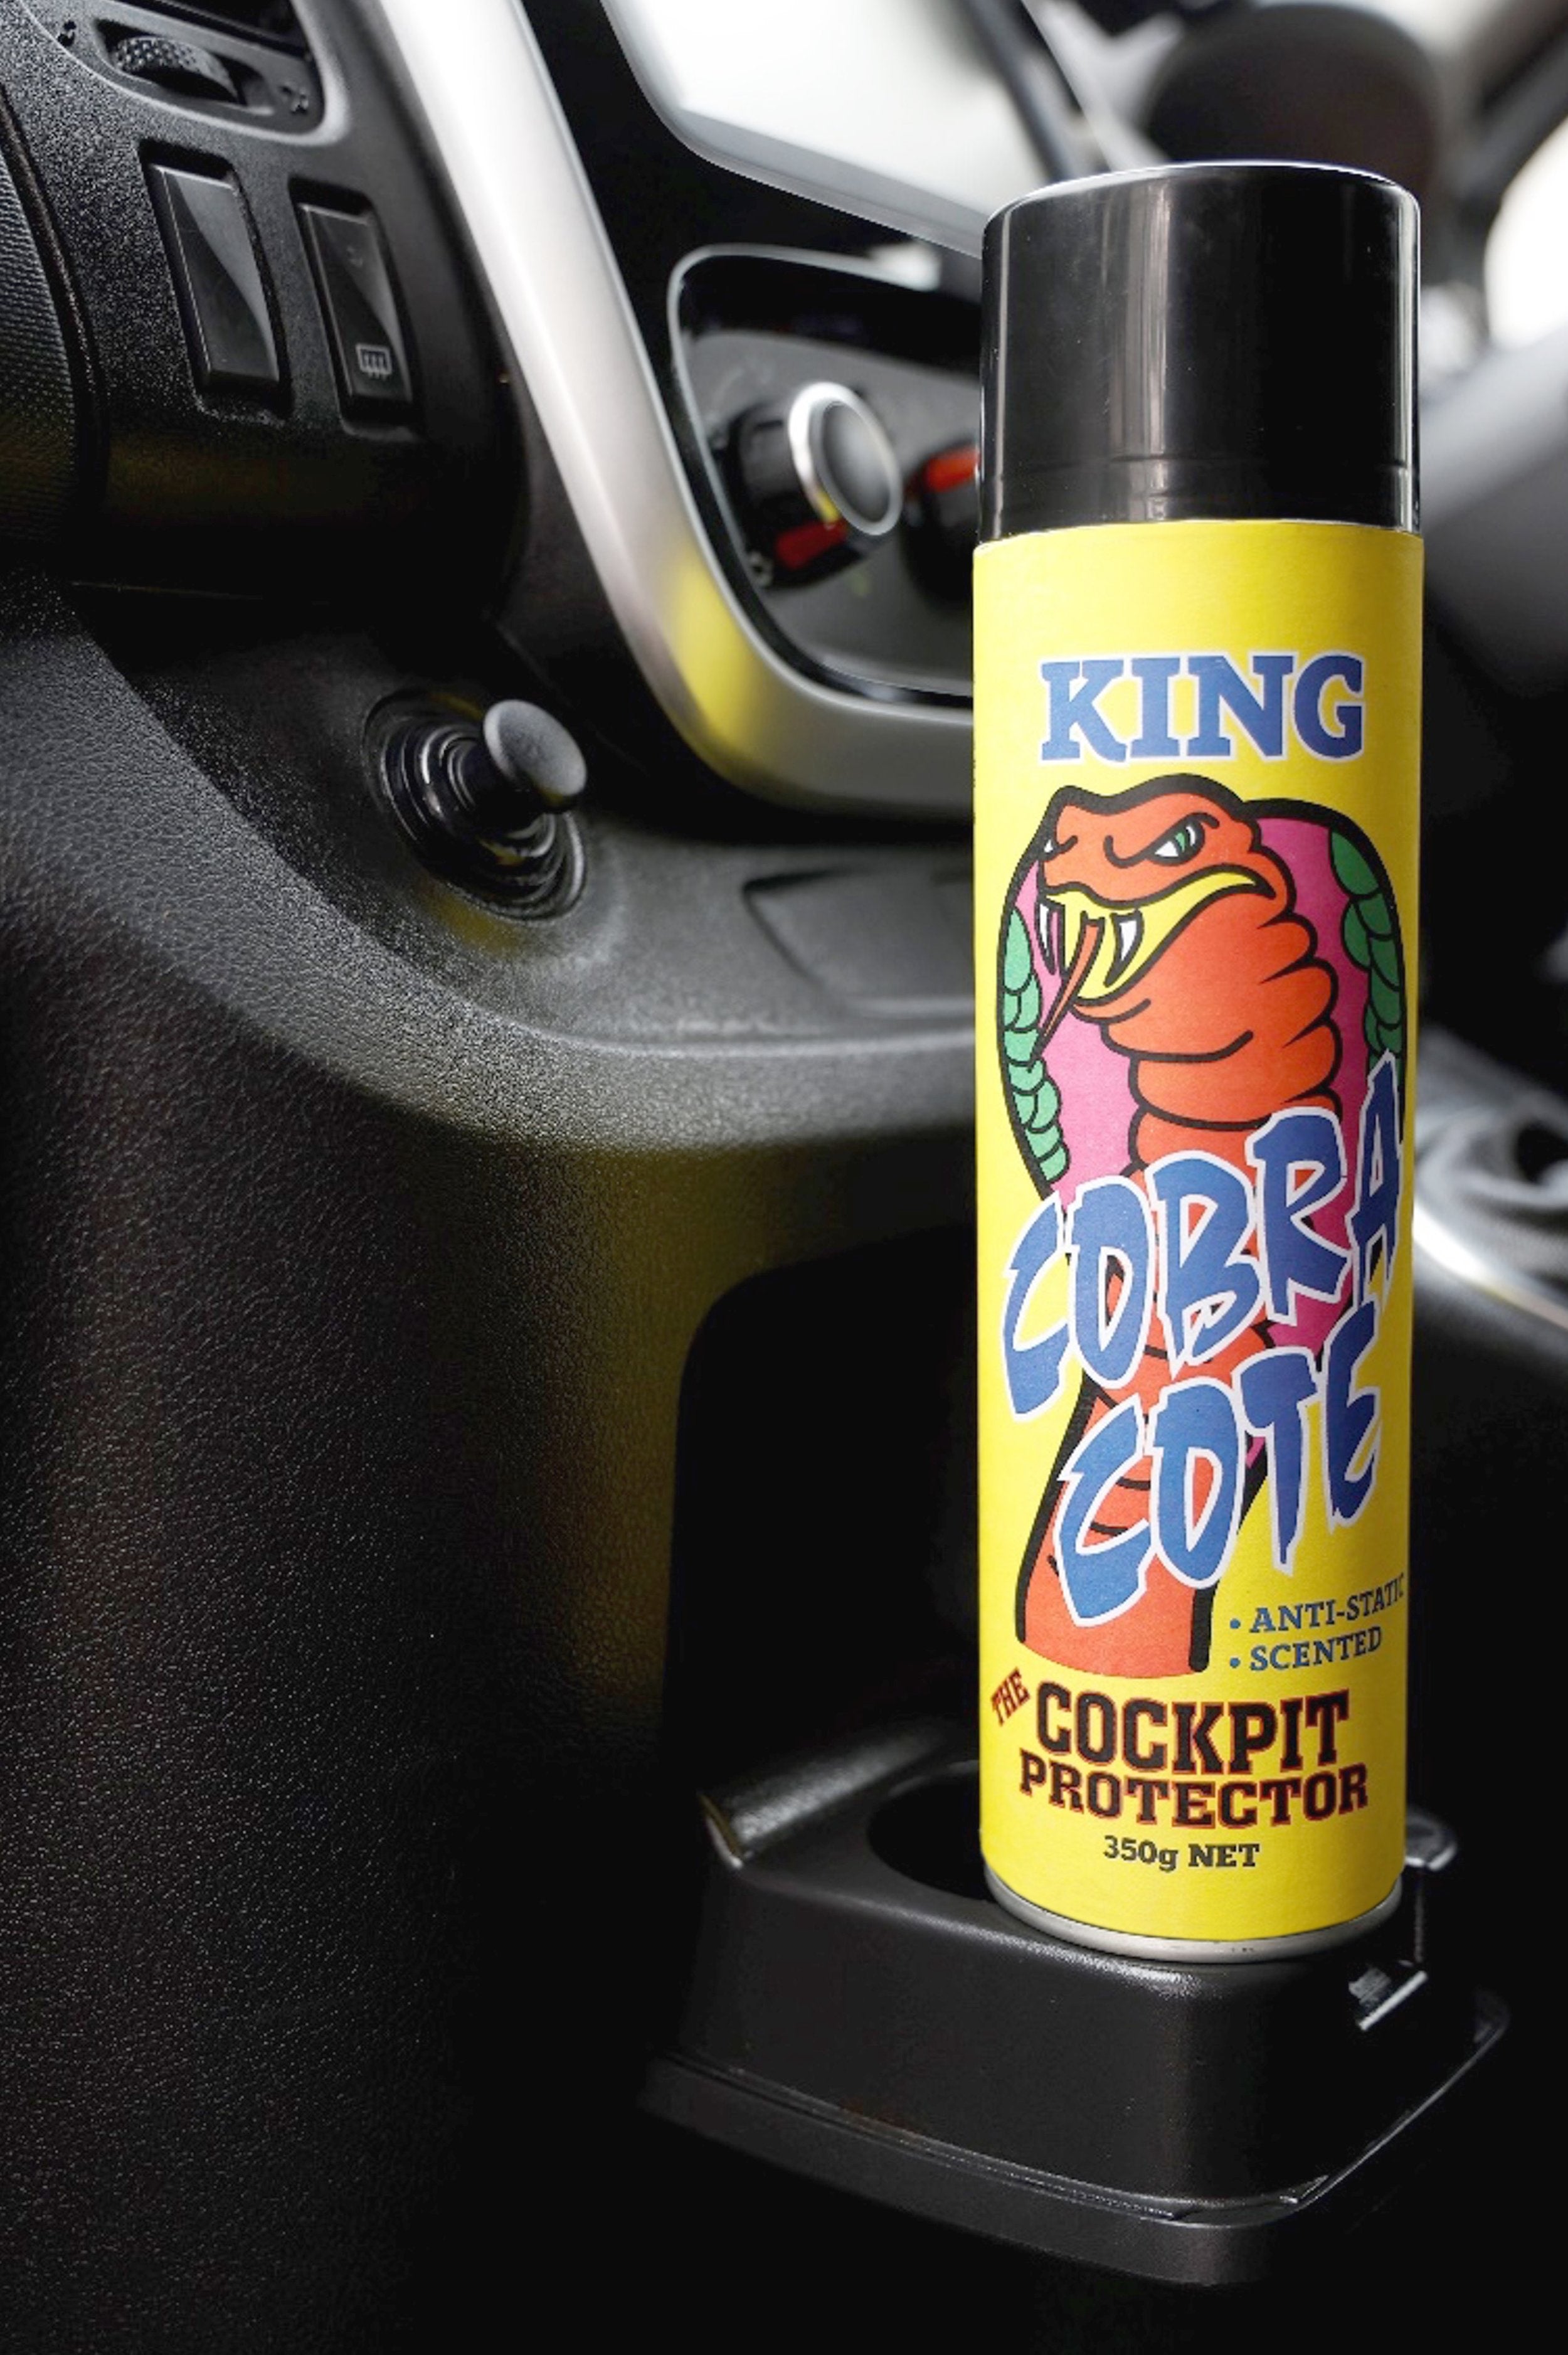 'KING' COBRA COTE VINYL PROTECTANT 350g